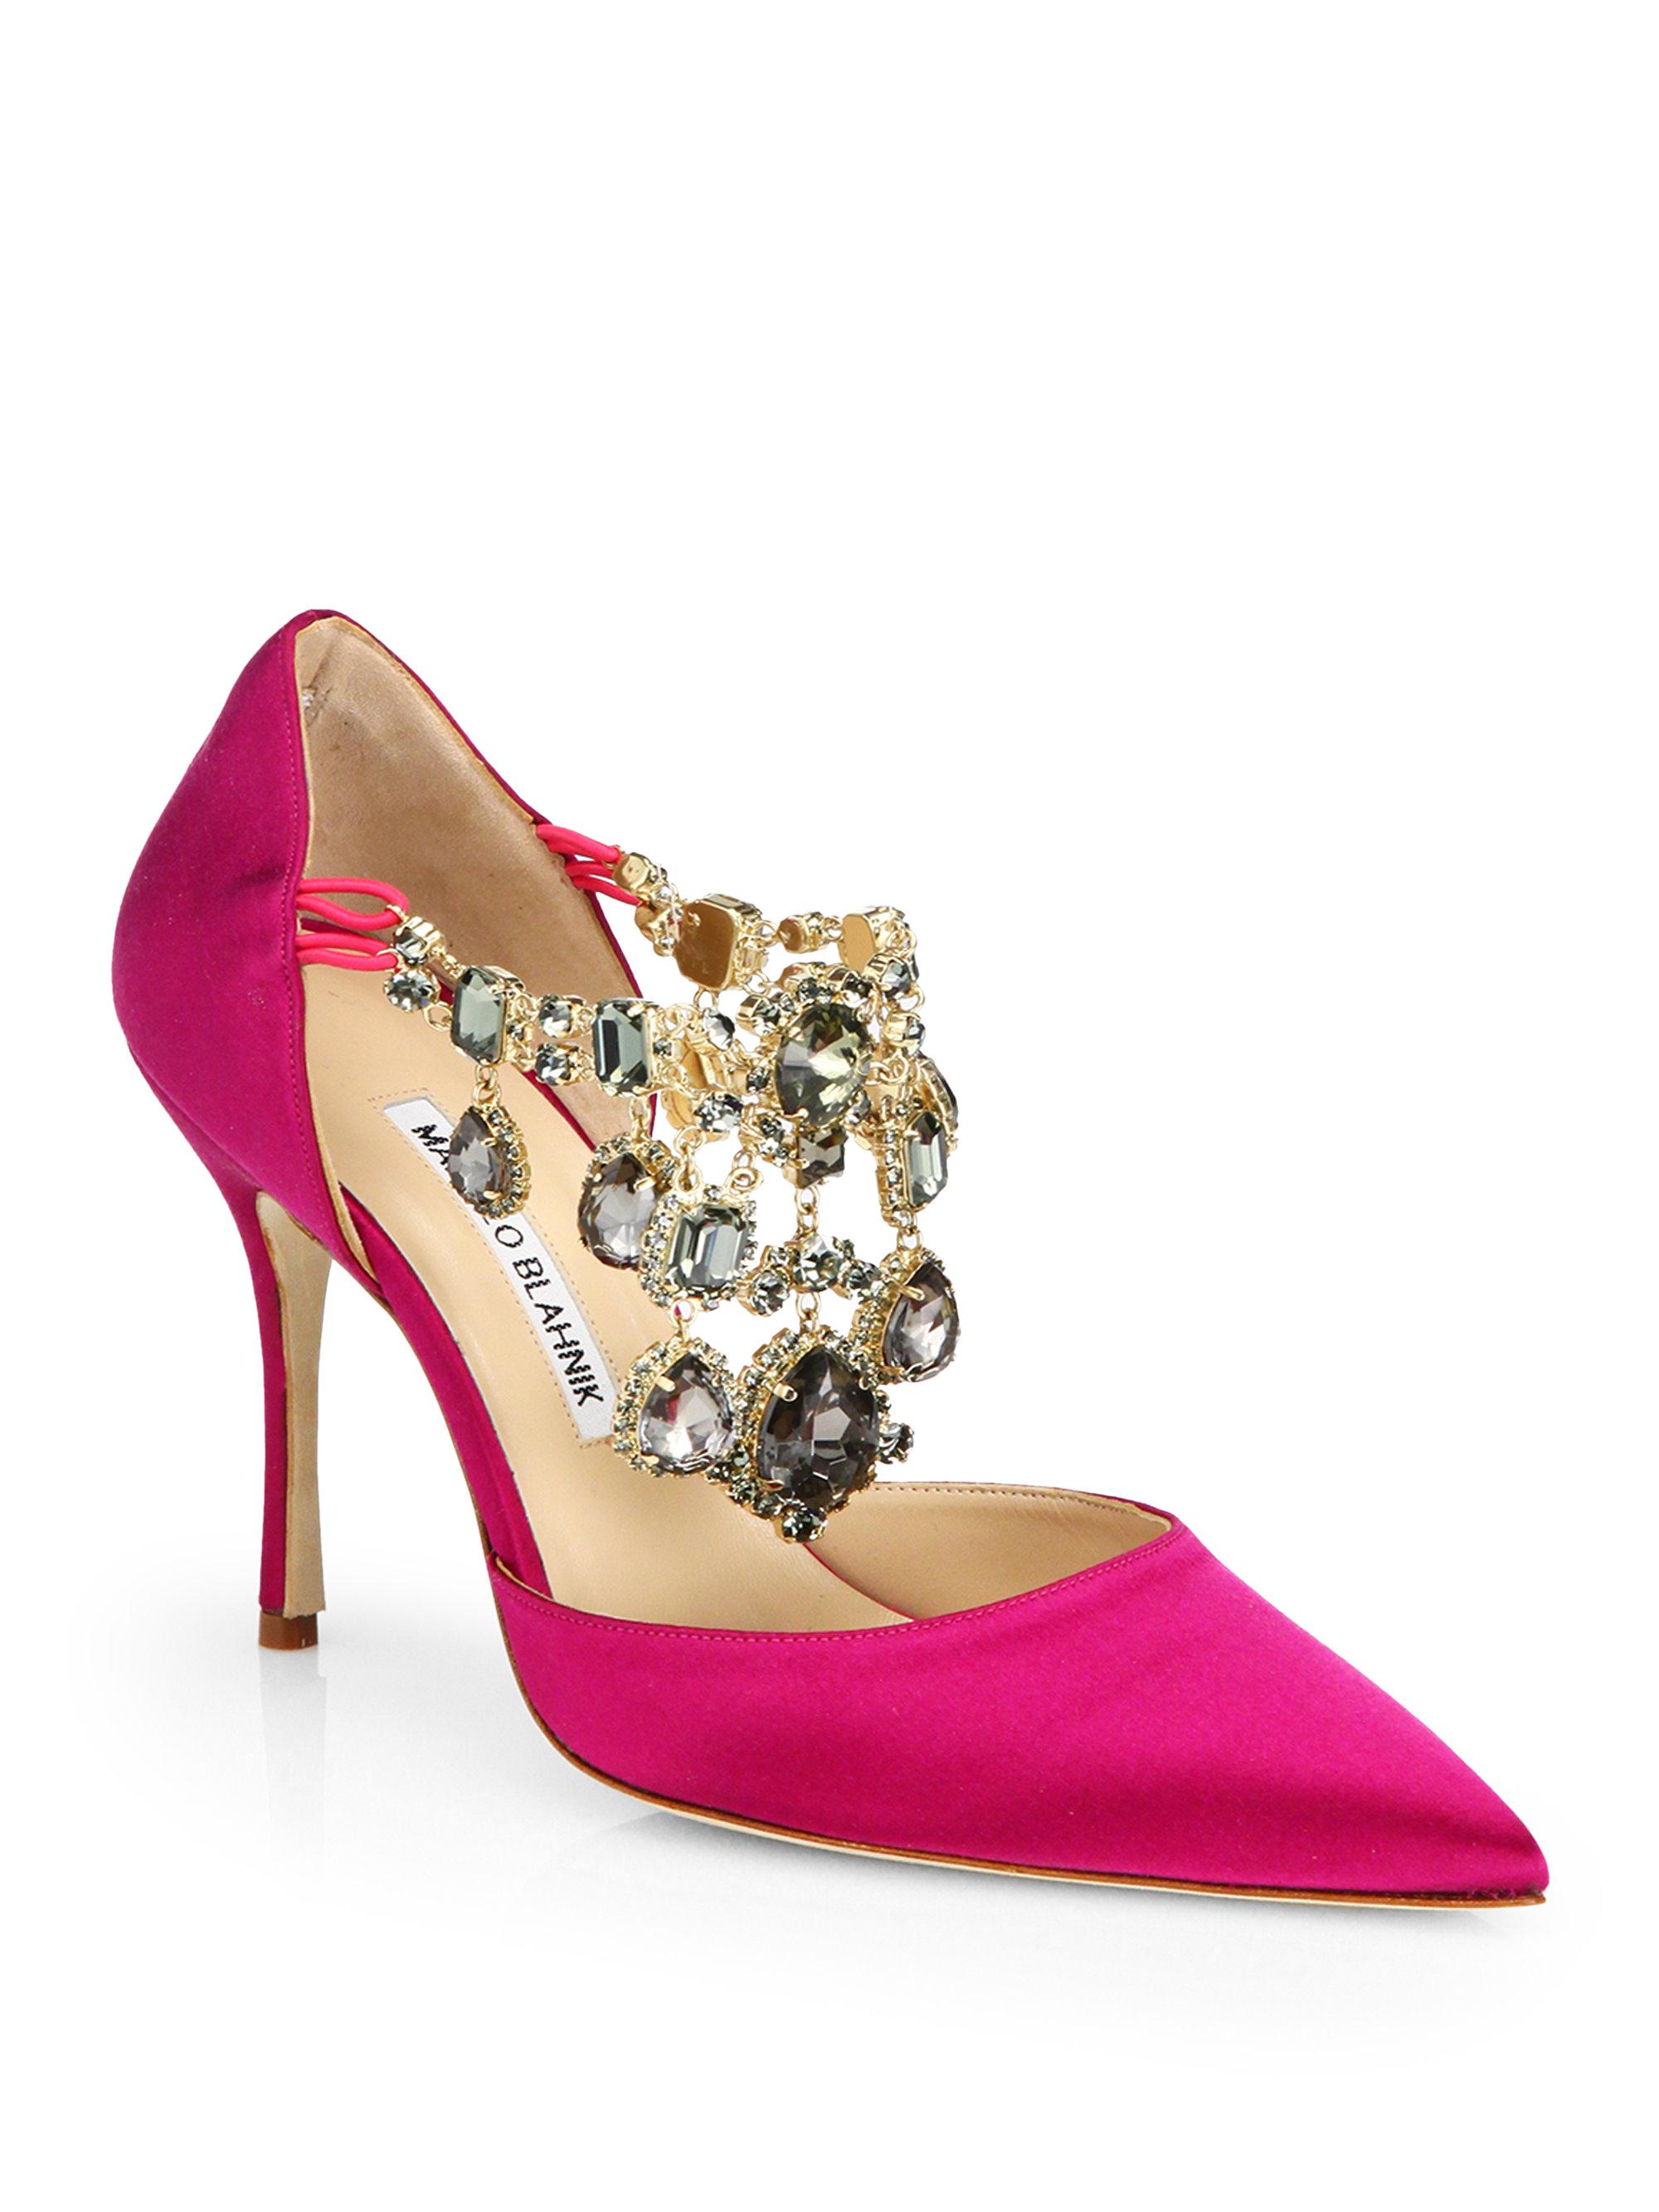 Lyst - Manolo Blahnik Zullin Satin Jeweled D'orsay Pumps in Pink